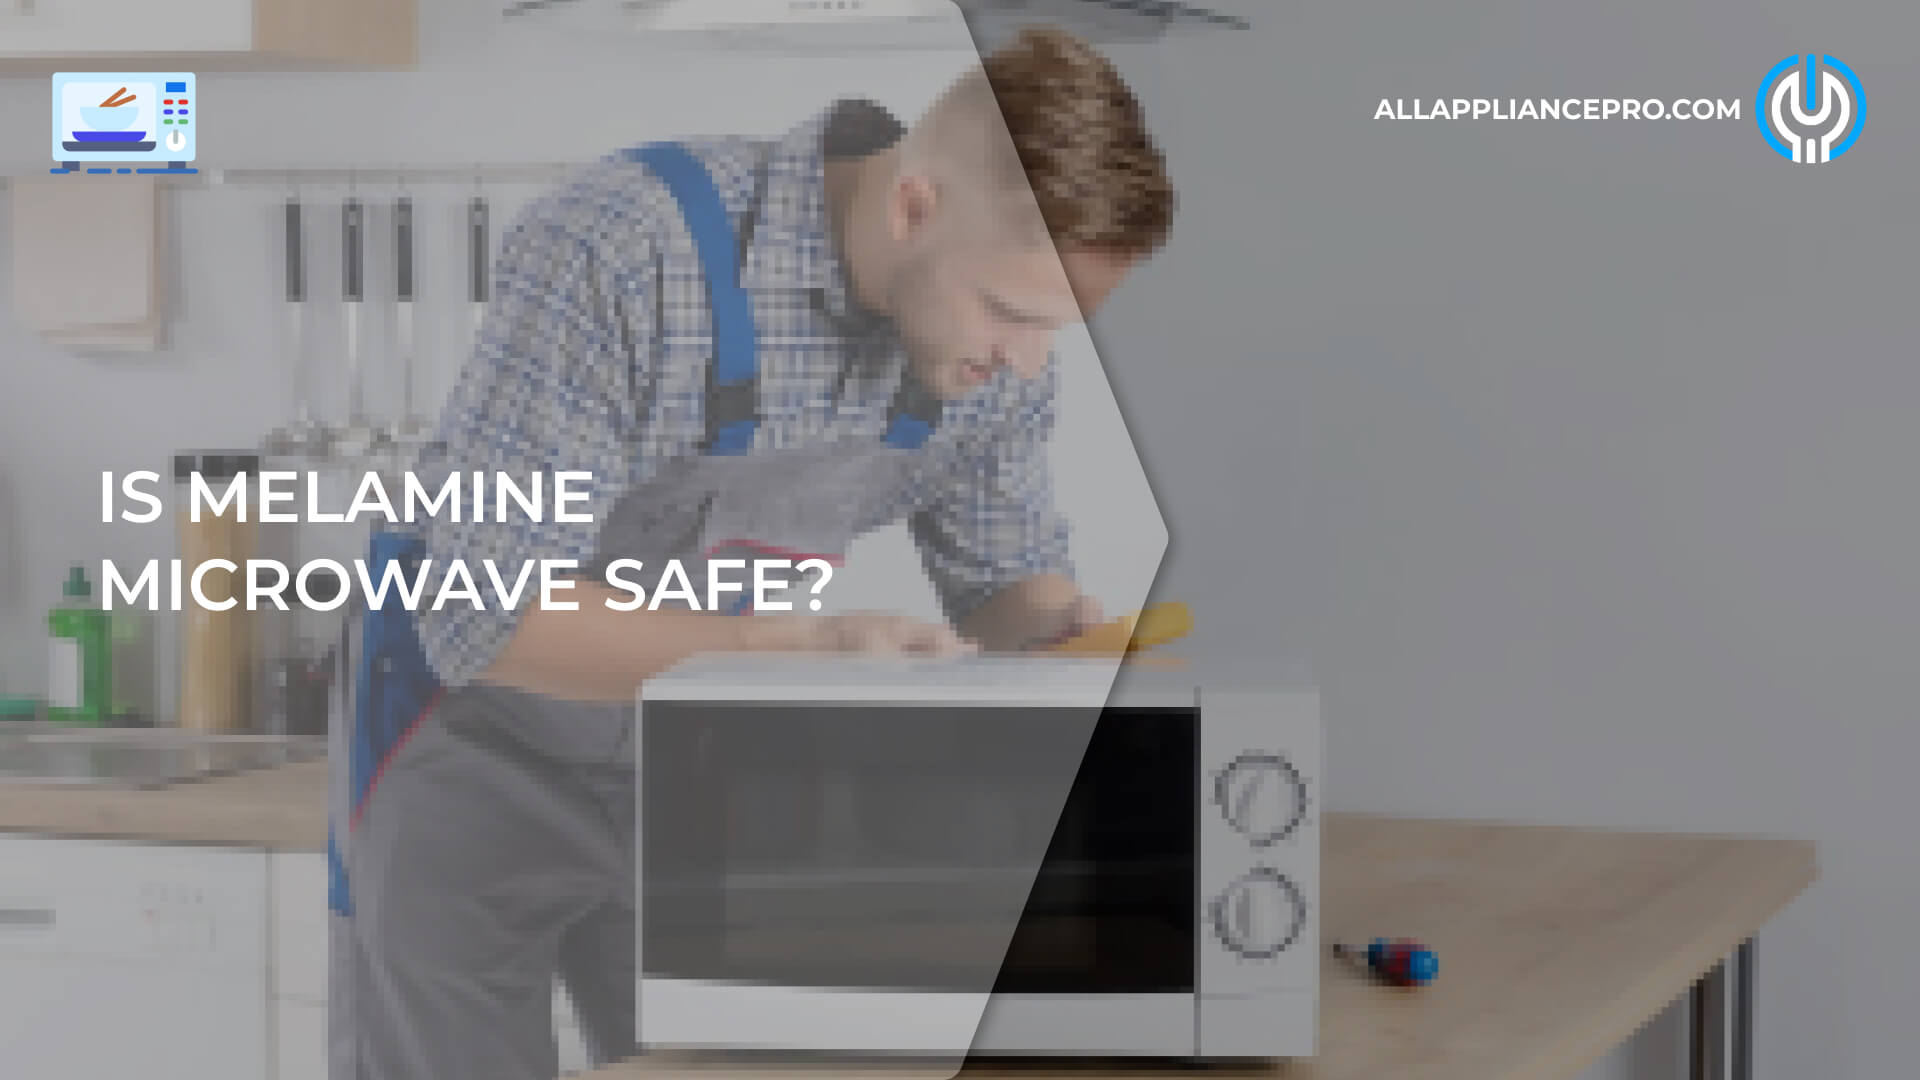 Melamine Microwave safety